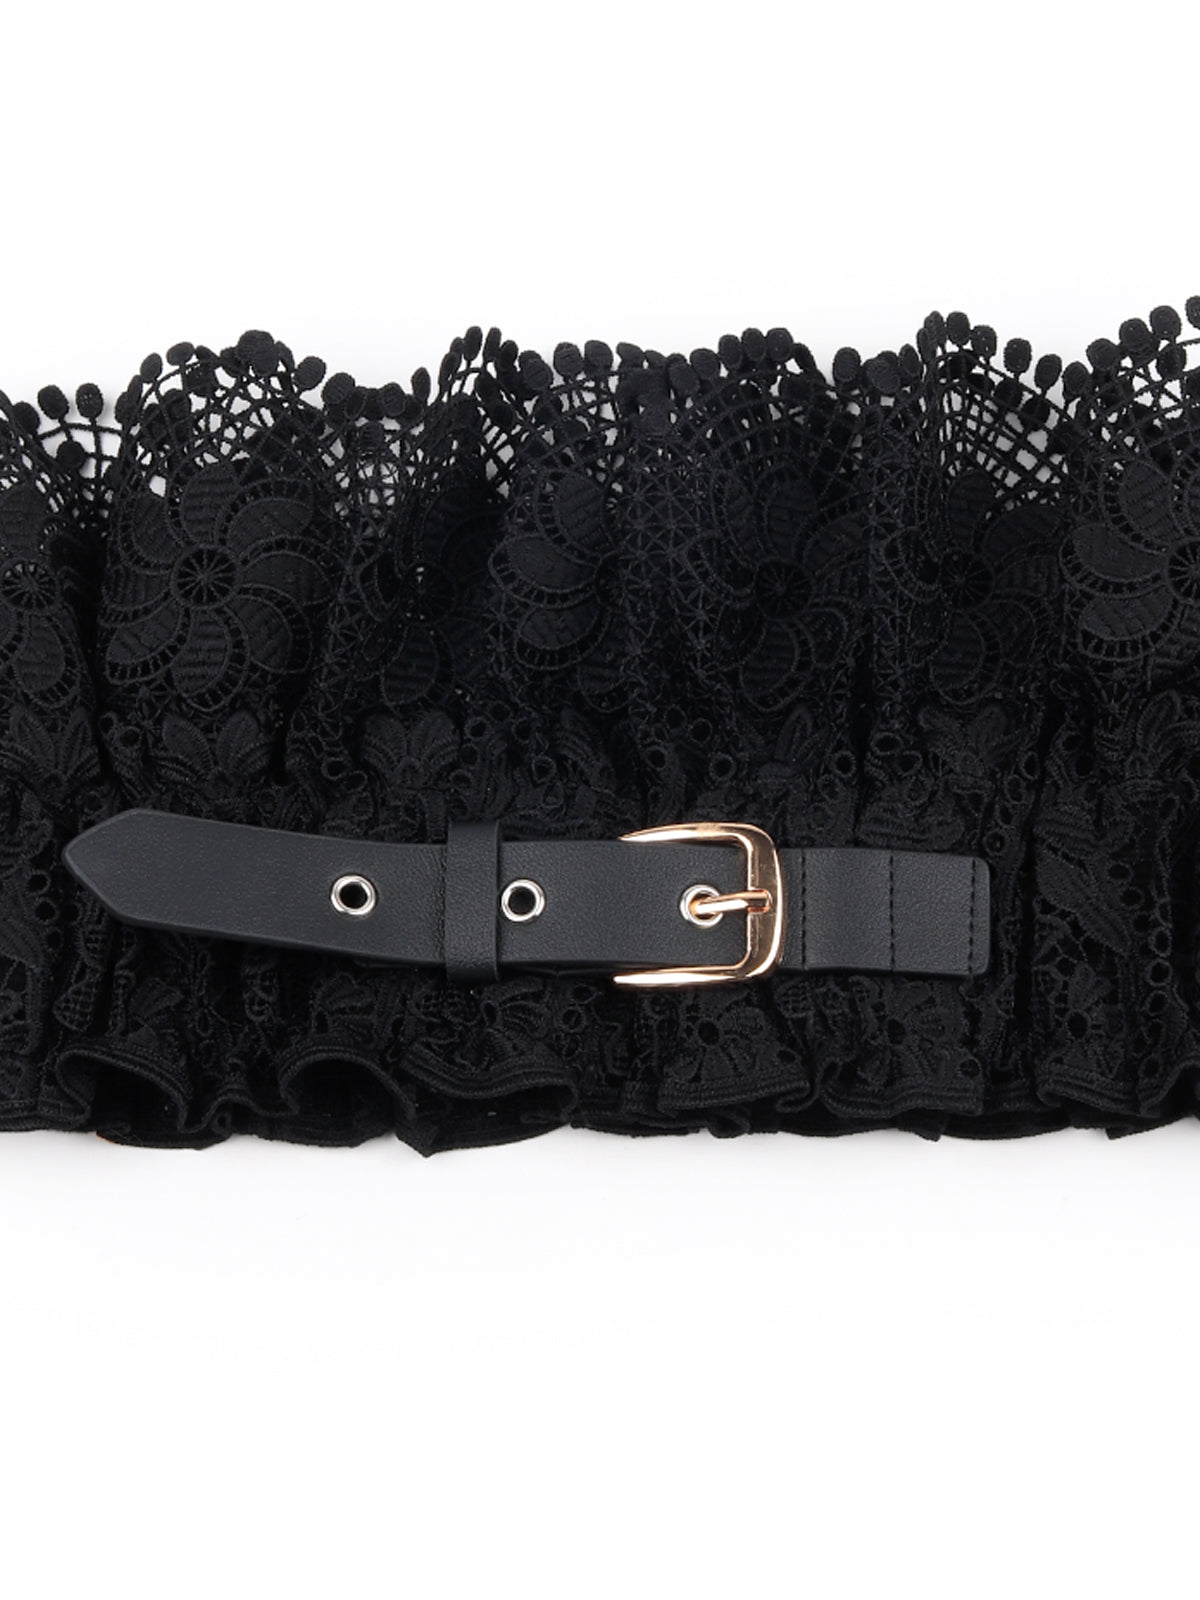 Odette Women Hi-Fashion Black Ruched Lace Belt With Buckle